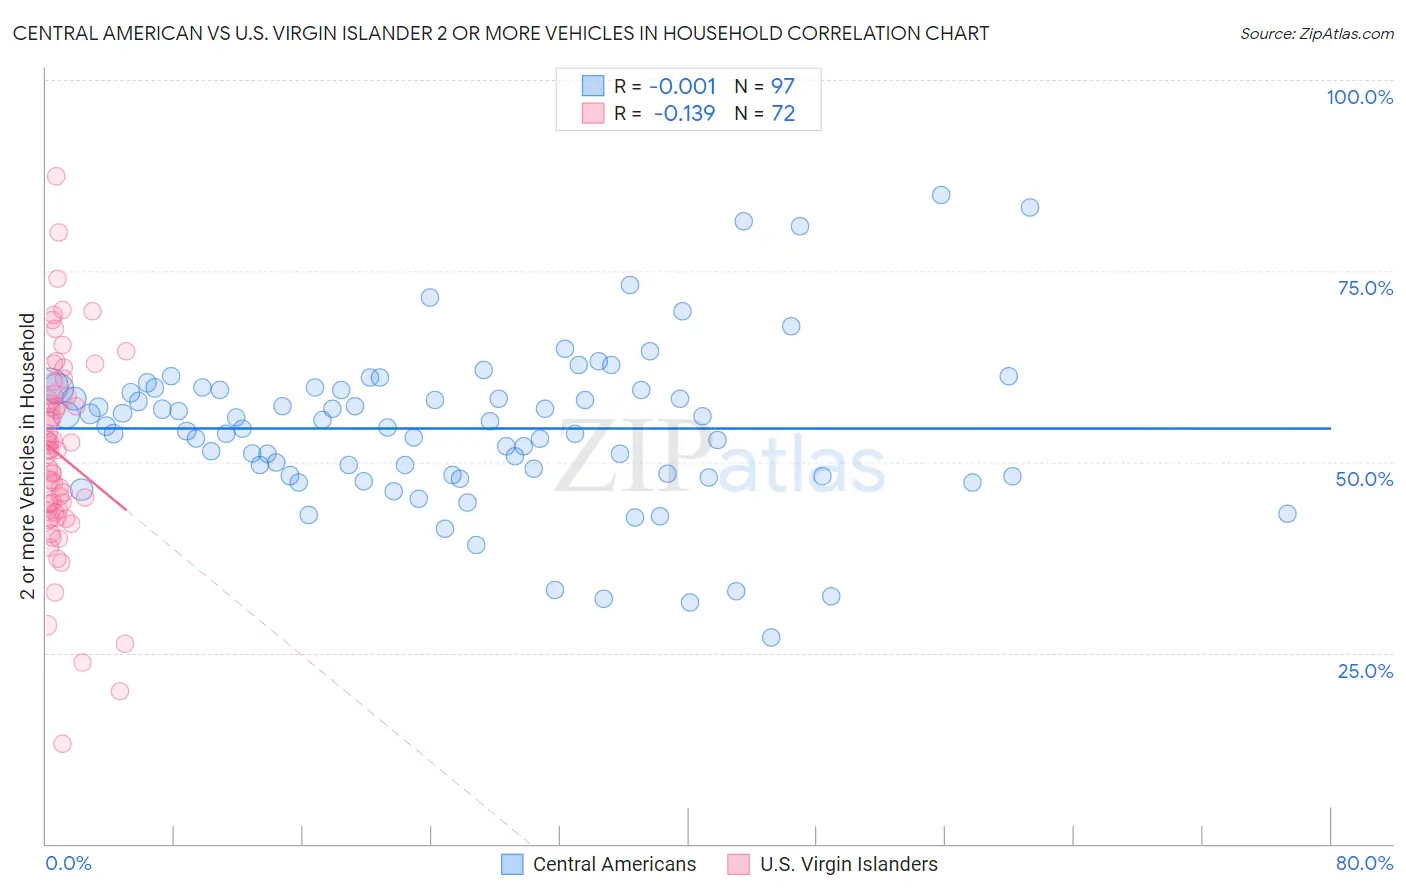 Central American vs U.S. Virgin Islander 2 or more Vehicles in Household